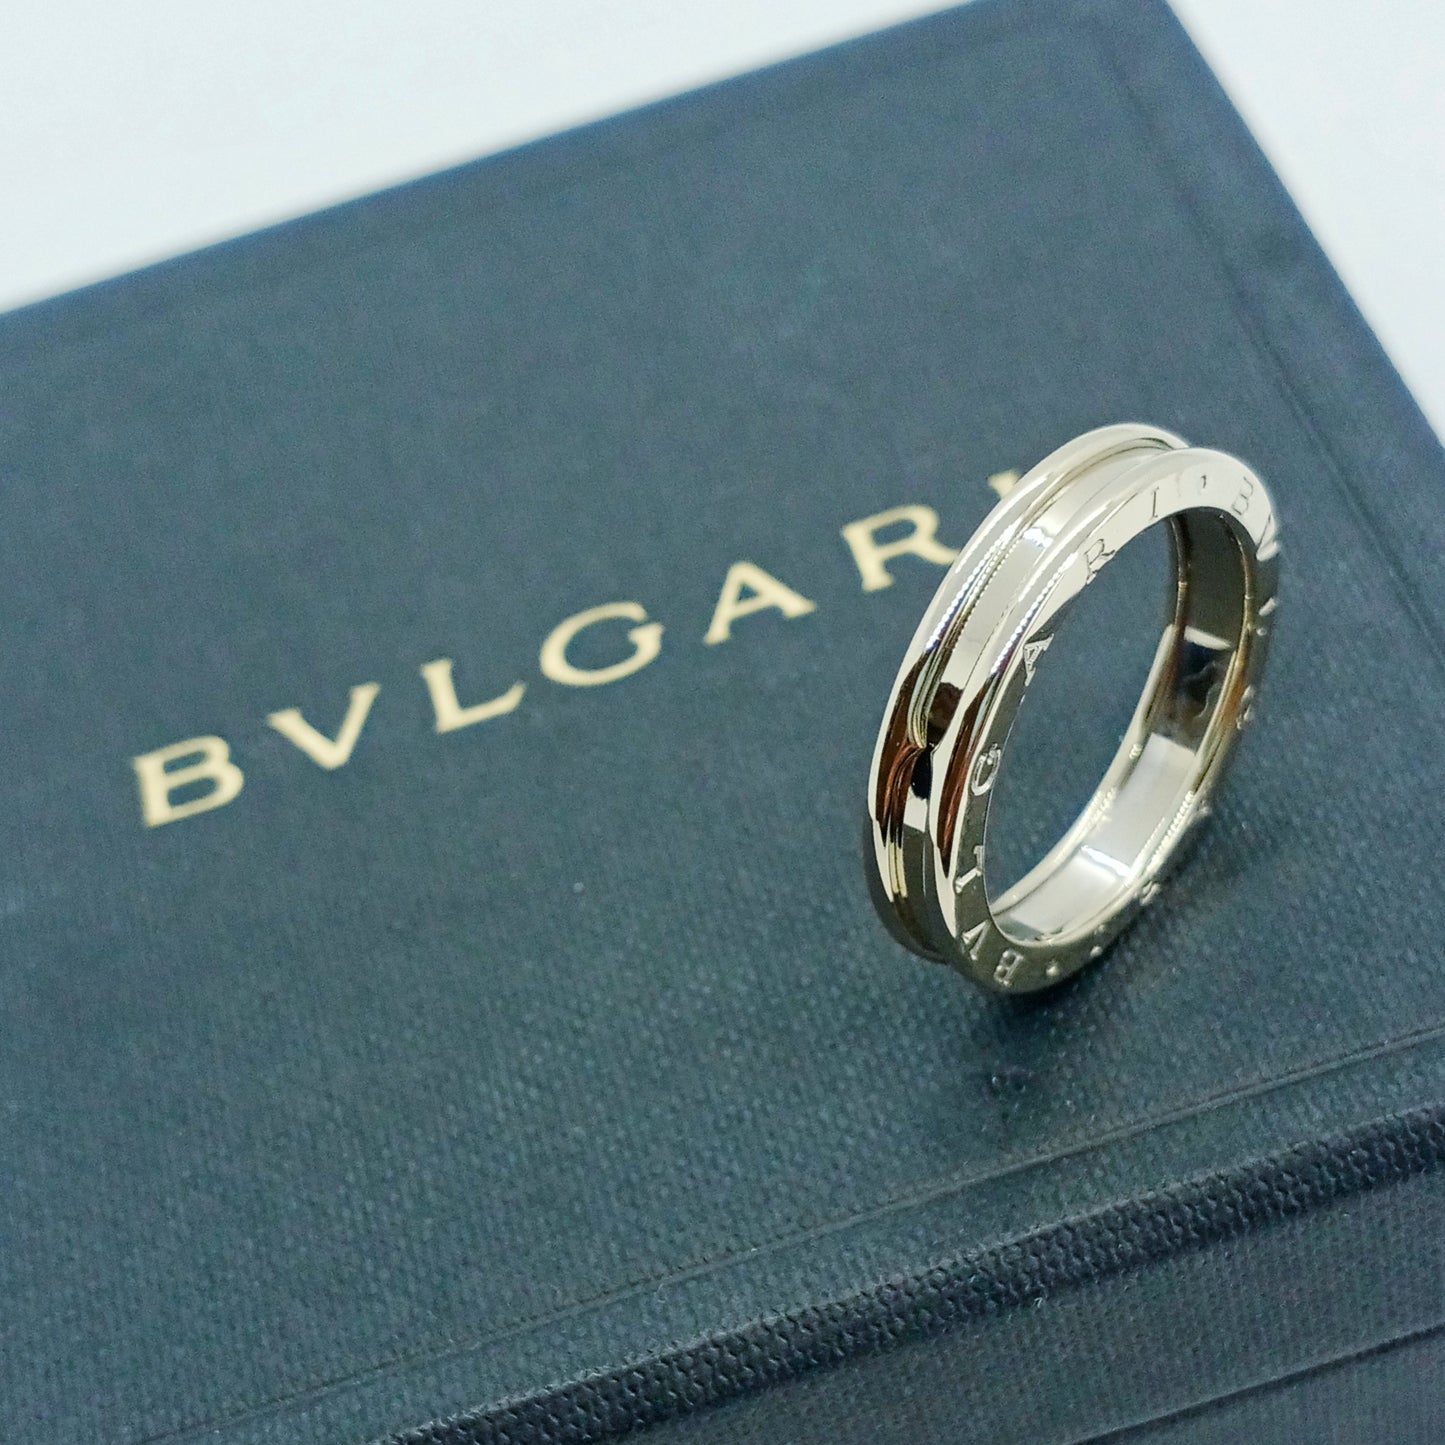 Bvlgari Bzero1 Ring Size 63